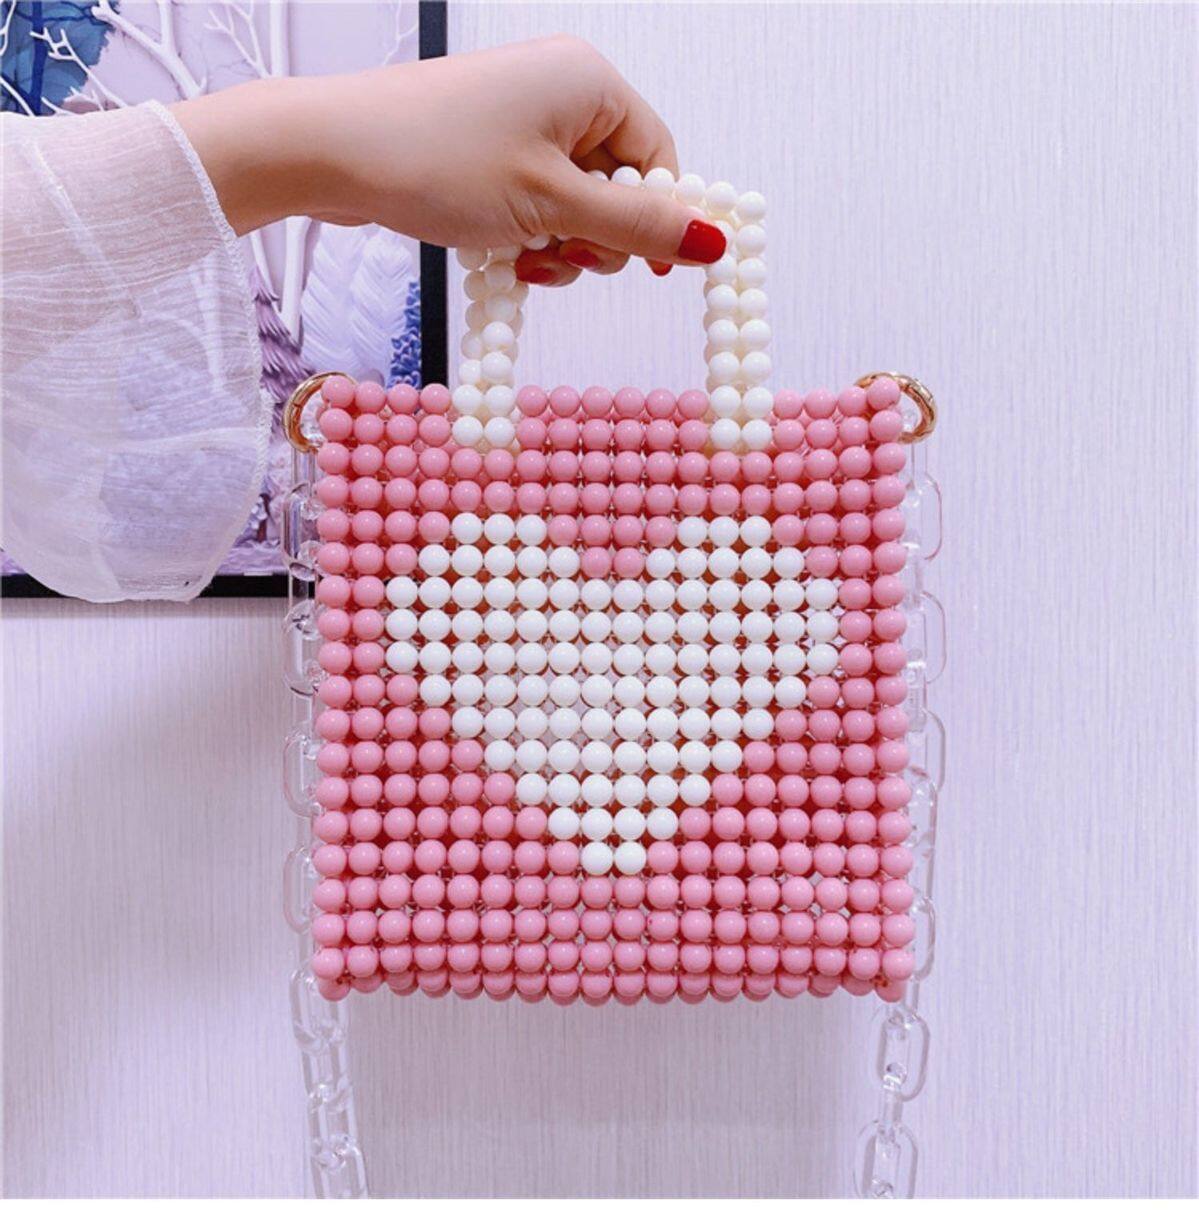 New handmade beaded bag woven bag diy material bag female ins All-match Internet celebrity shoulder bag homemade gift